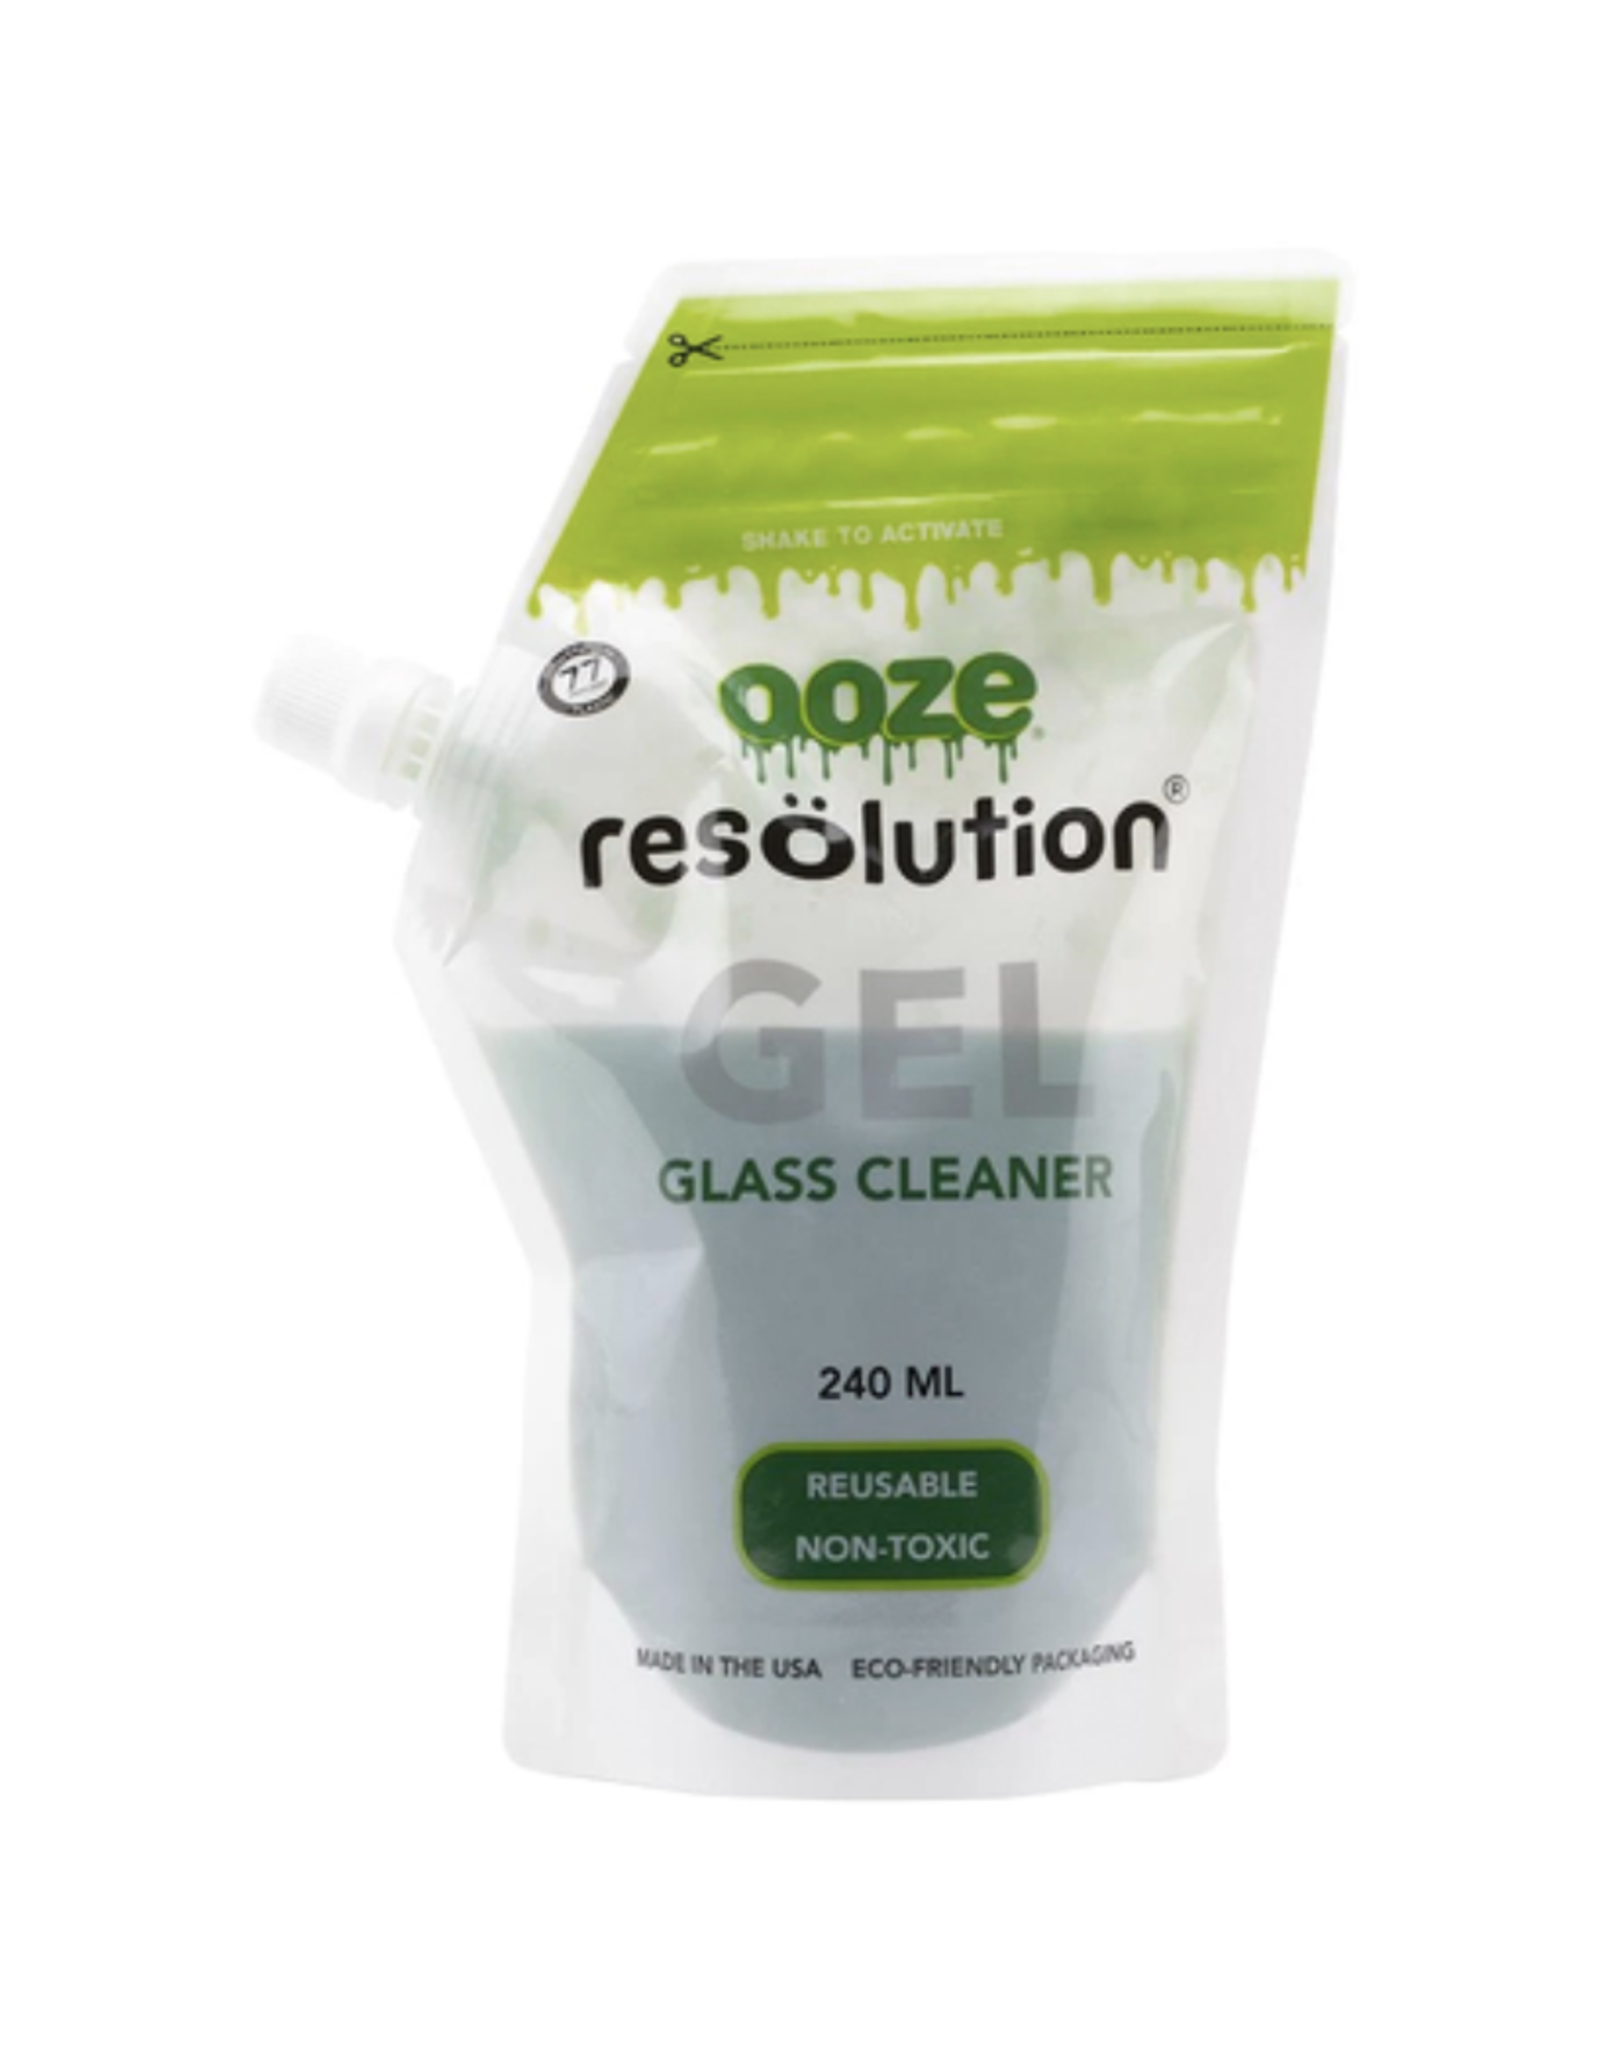 Ooze Resolution Gel Glass Cleaner 240ml